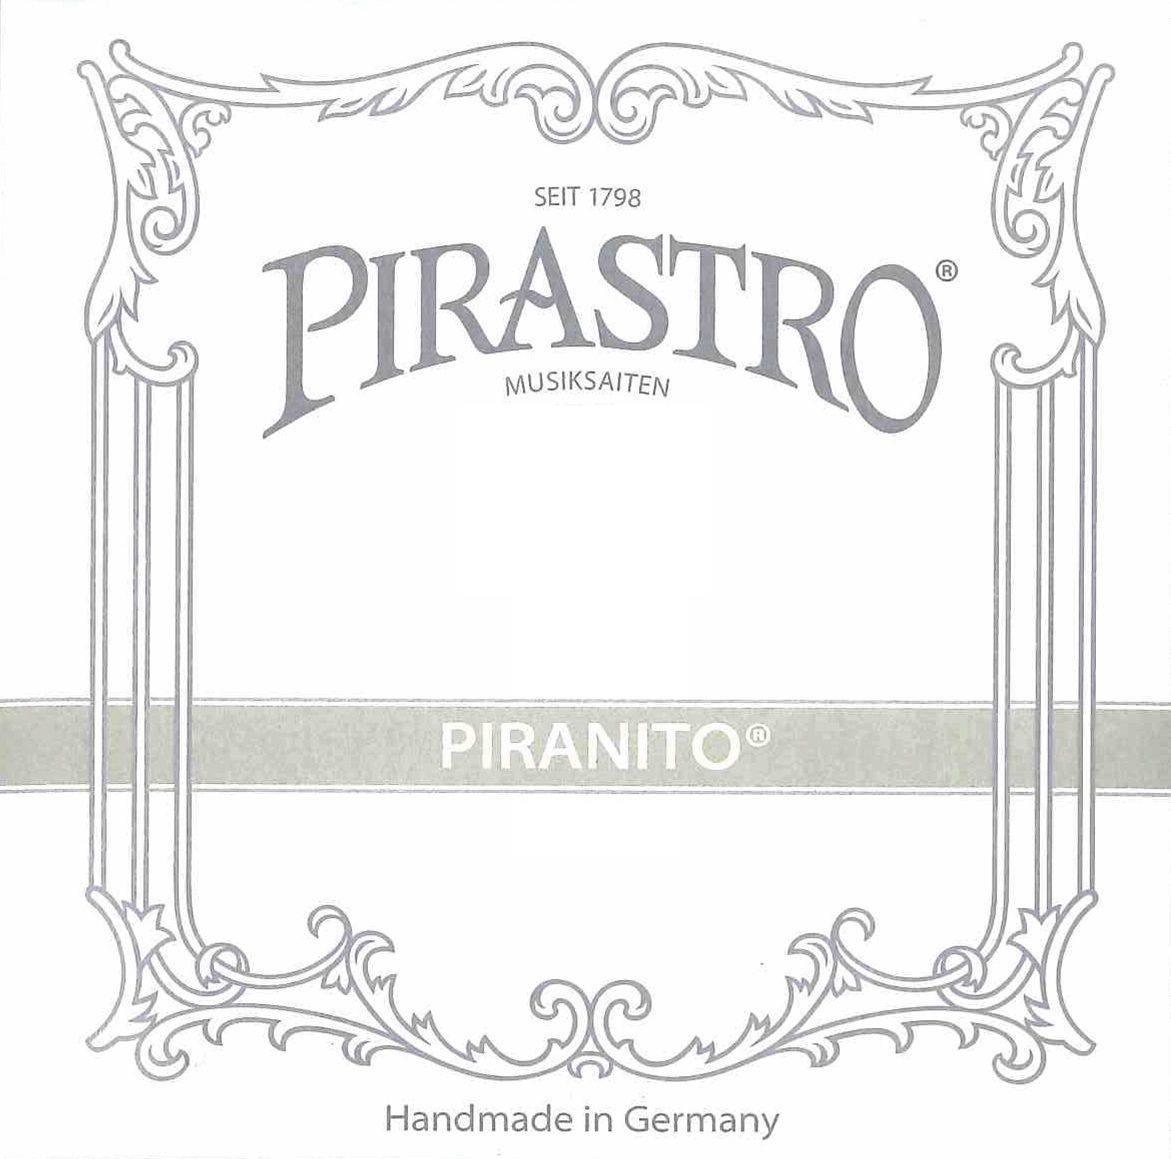 Pirastro 1/2-3/4 Piranito Viola String Set - Orchestral - Strings - Accessories by Pirastro at Muso's Stuff